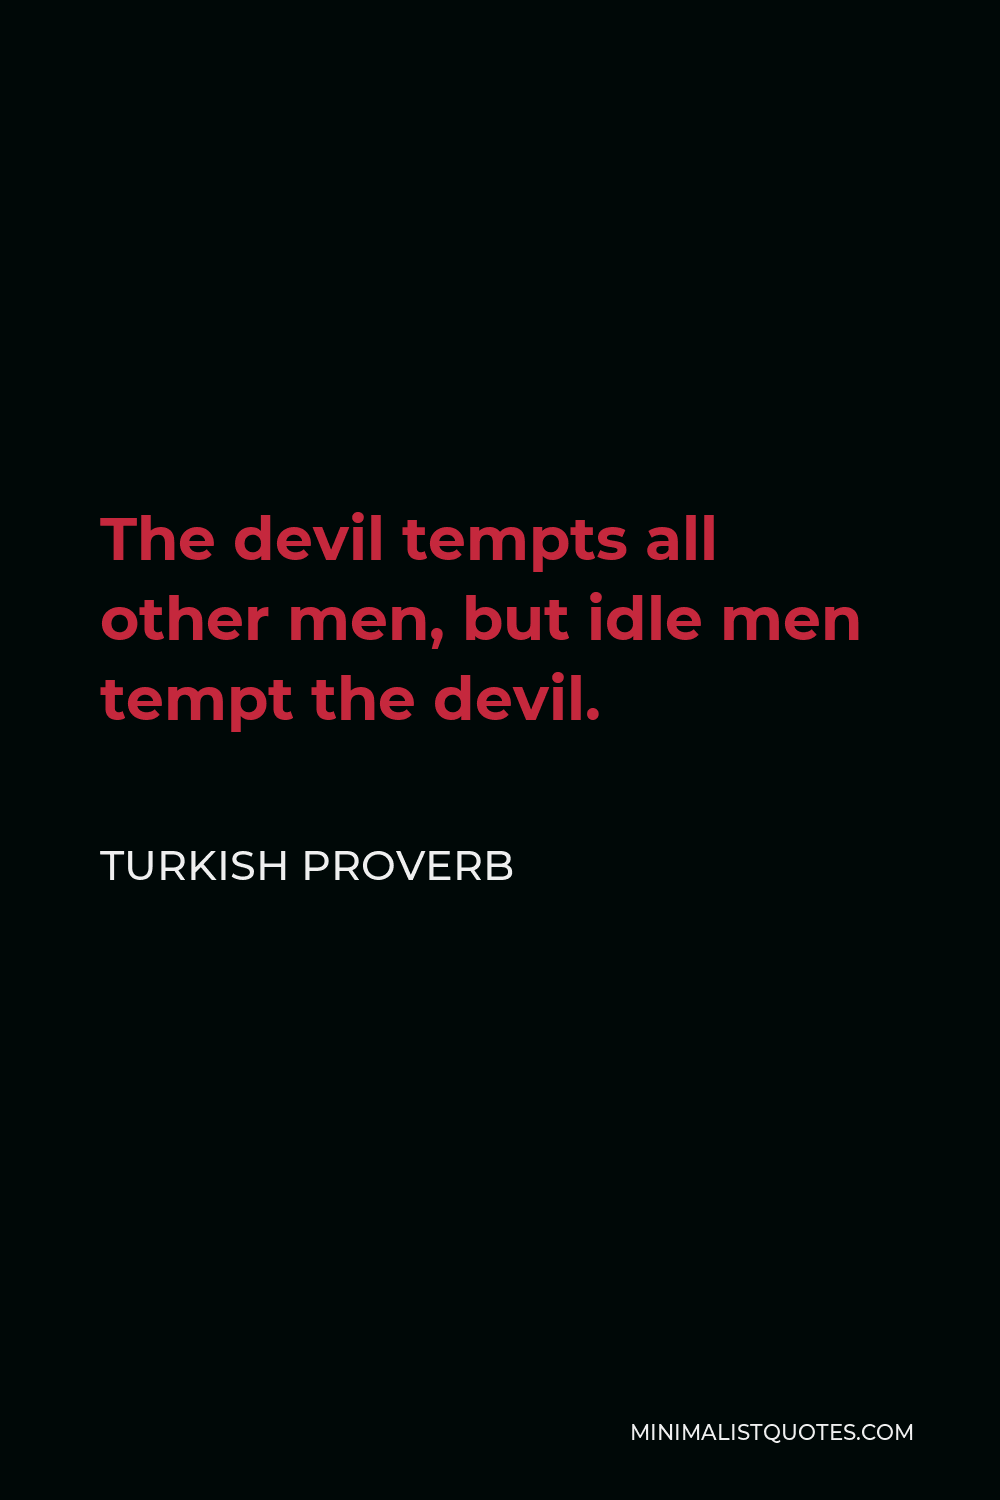 Turkish Proverb Quote - The devil tempts all other men, but idle men tempt the devil